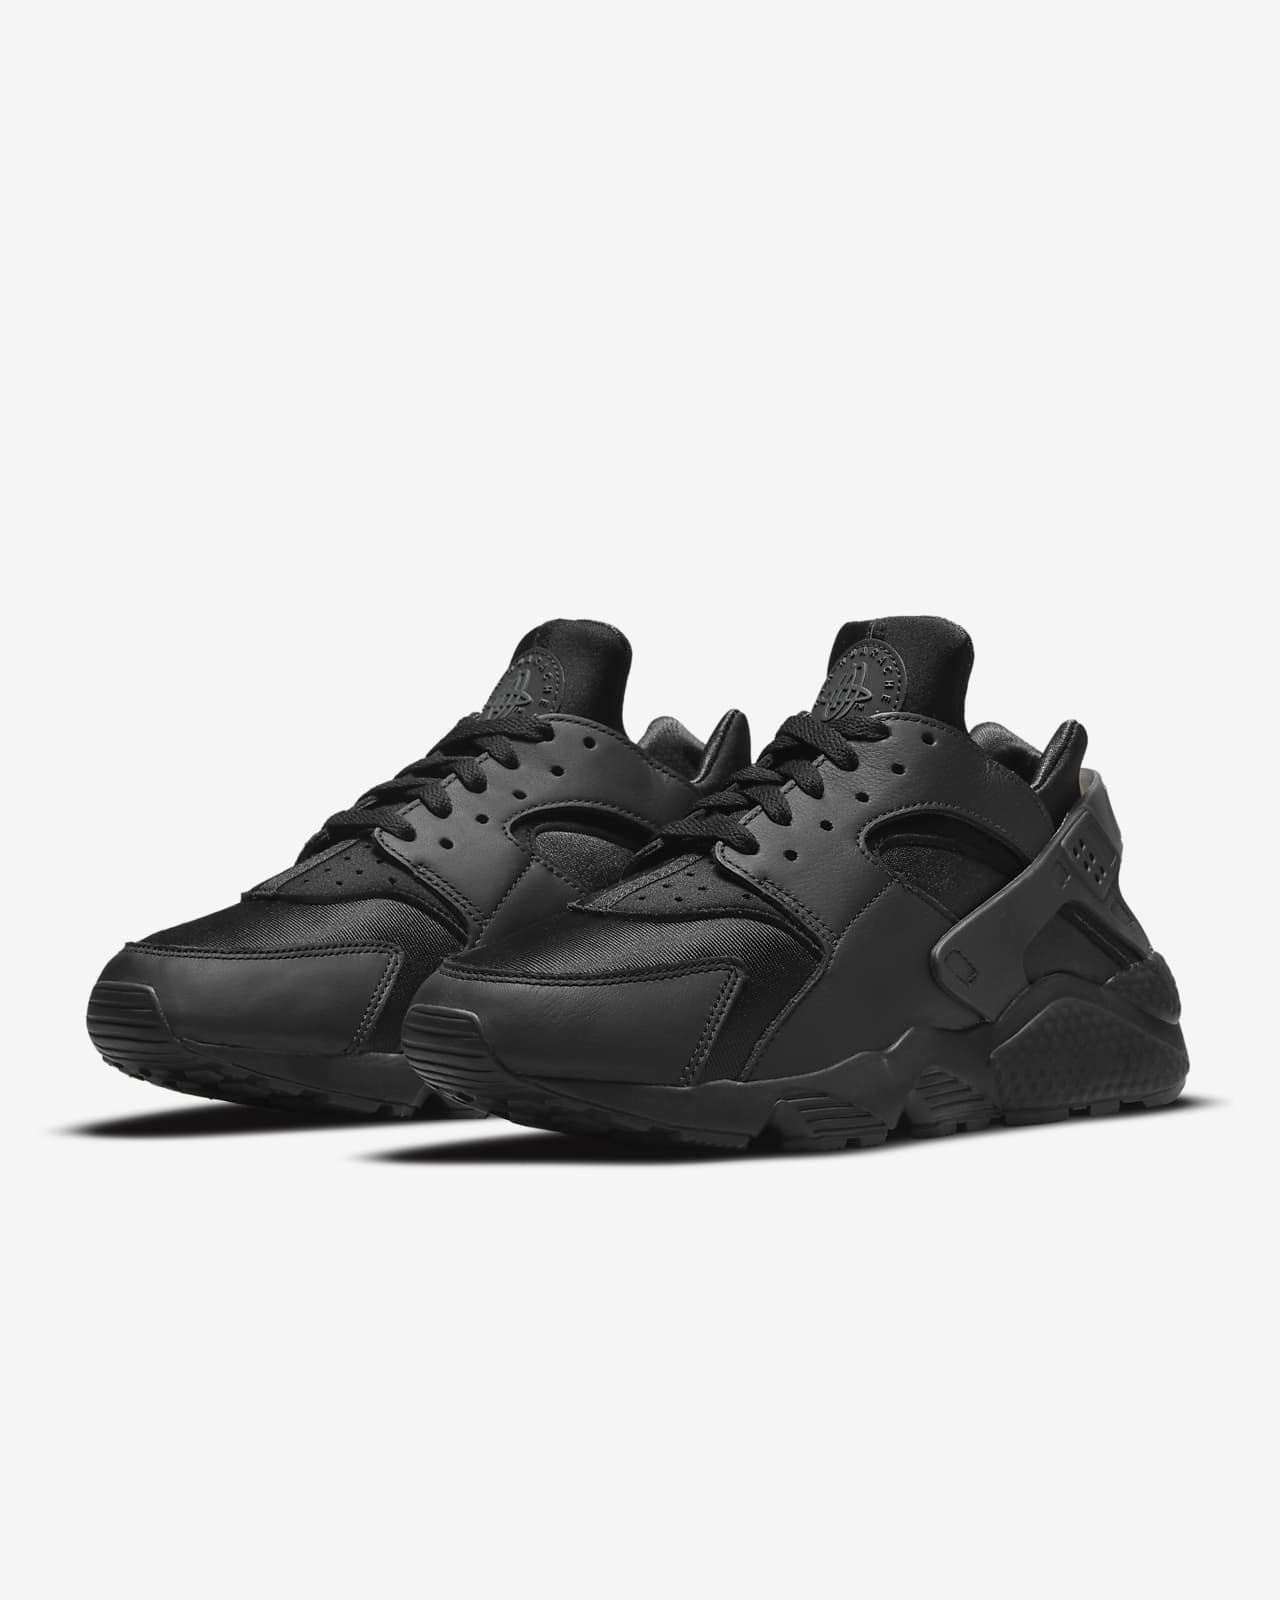 huarache shoes black and grey